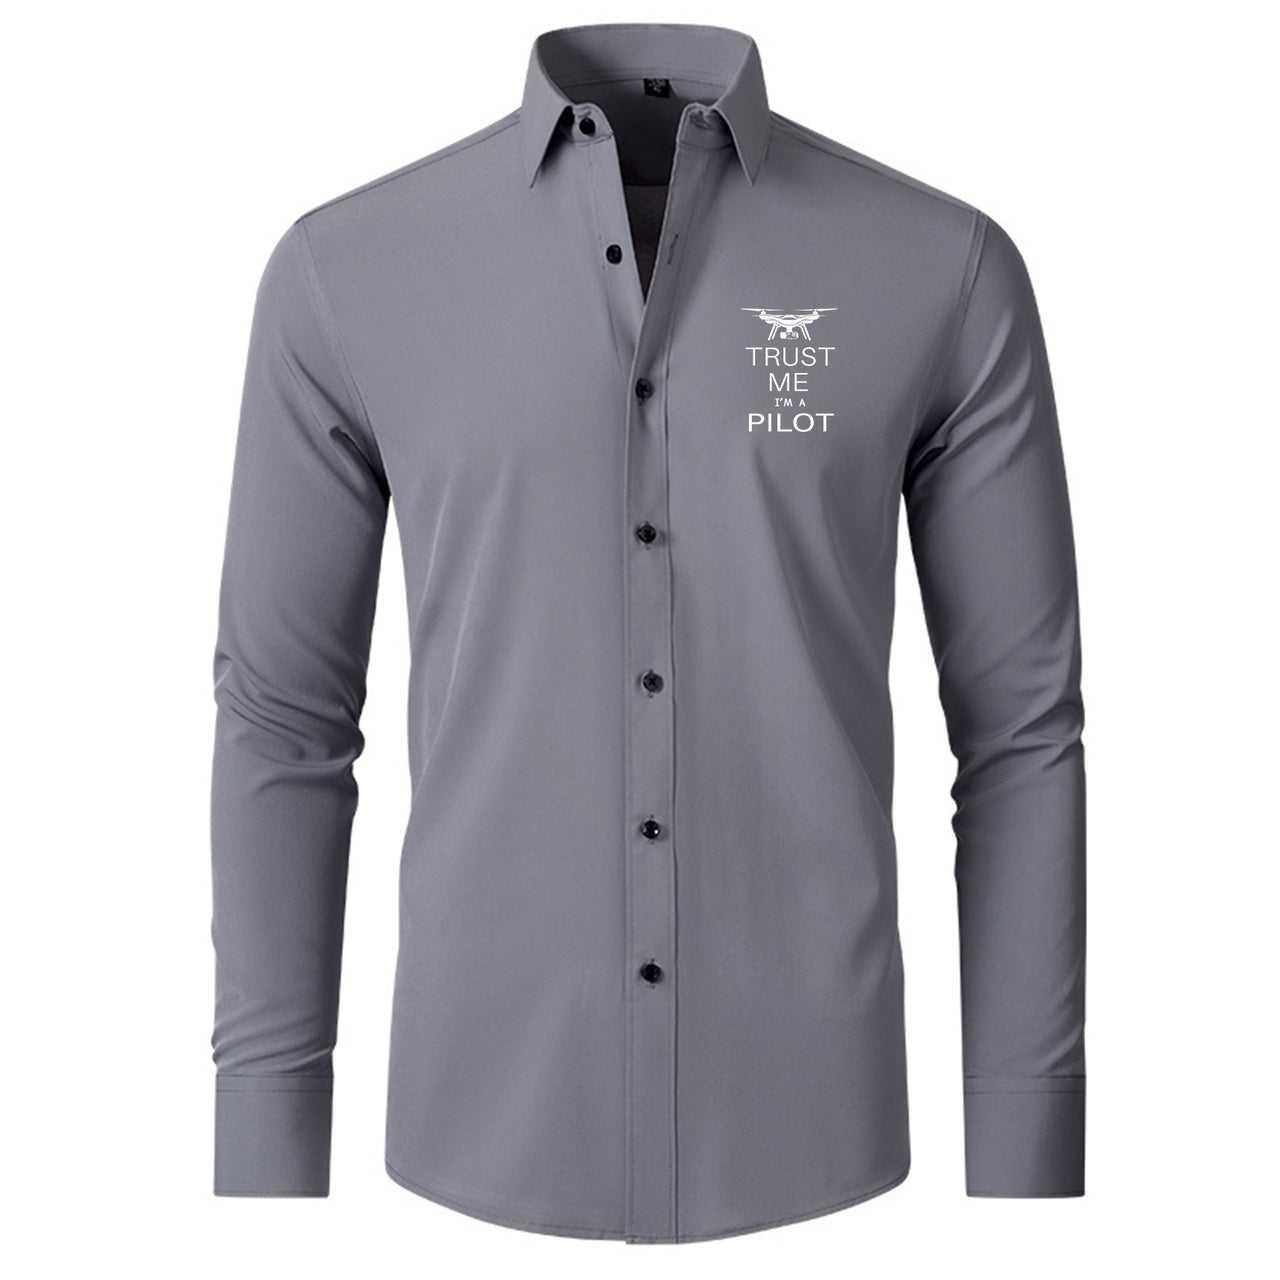 Trust Me I'm a Pilot (Drone) Designed Long Sleeve Shirts